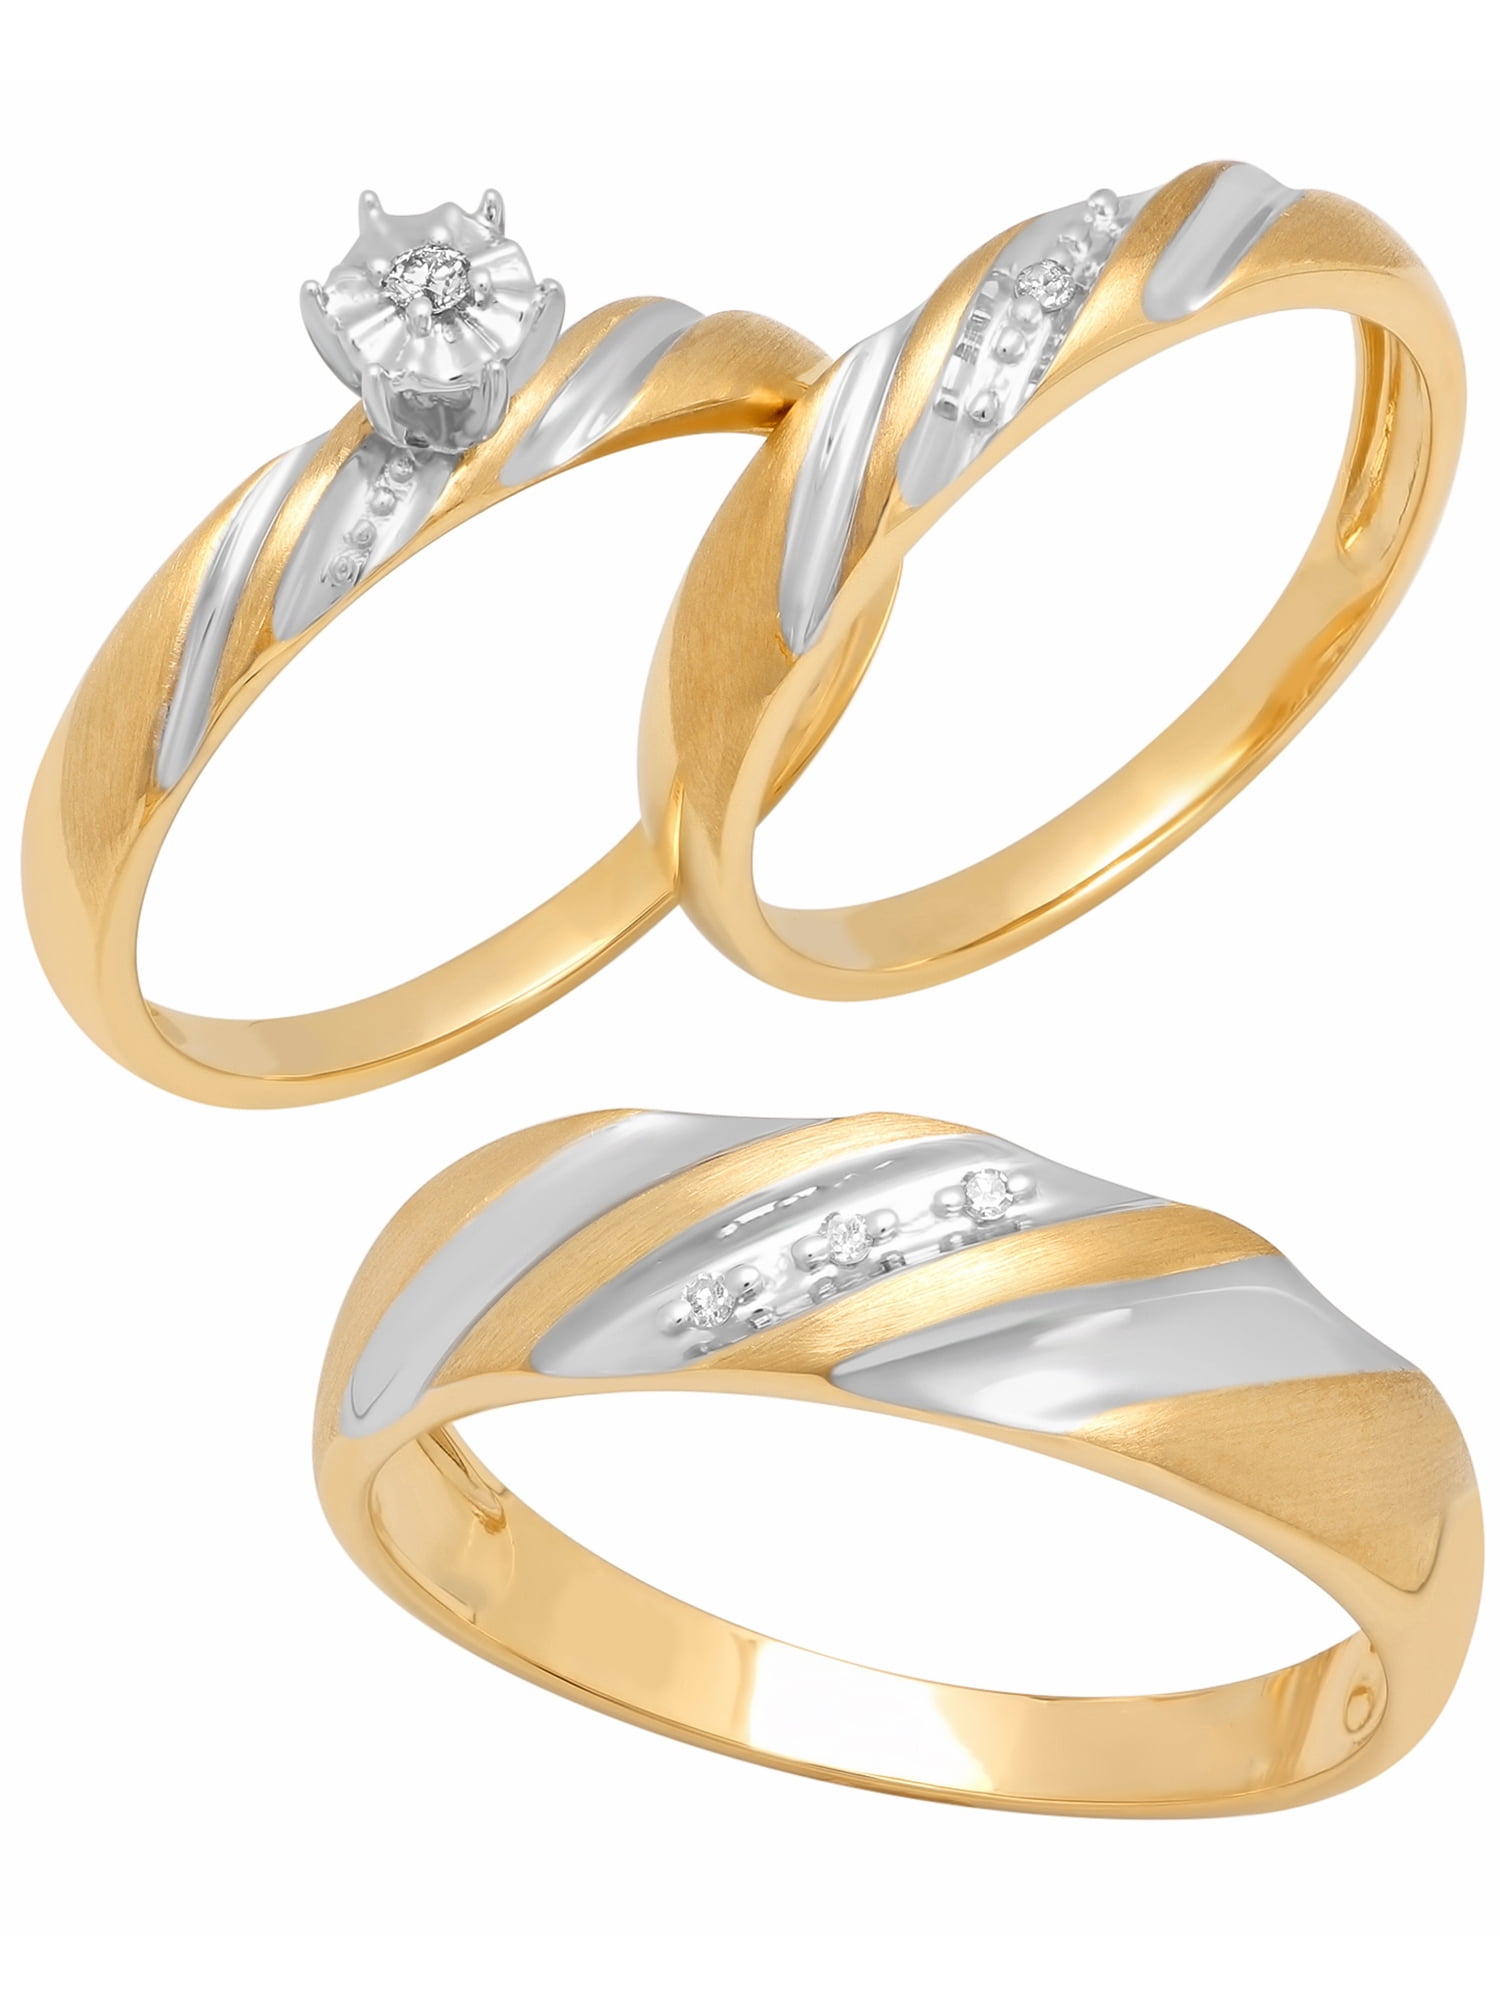 10k Yellow Gold Trio His Her Men Womens Diamond Rings Set Wedding Bridal Bands 